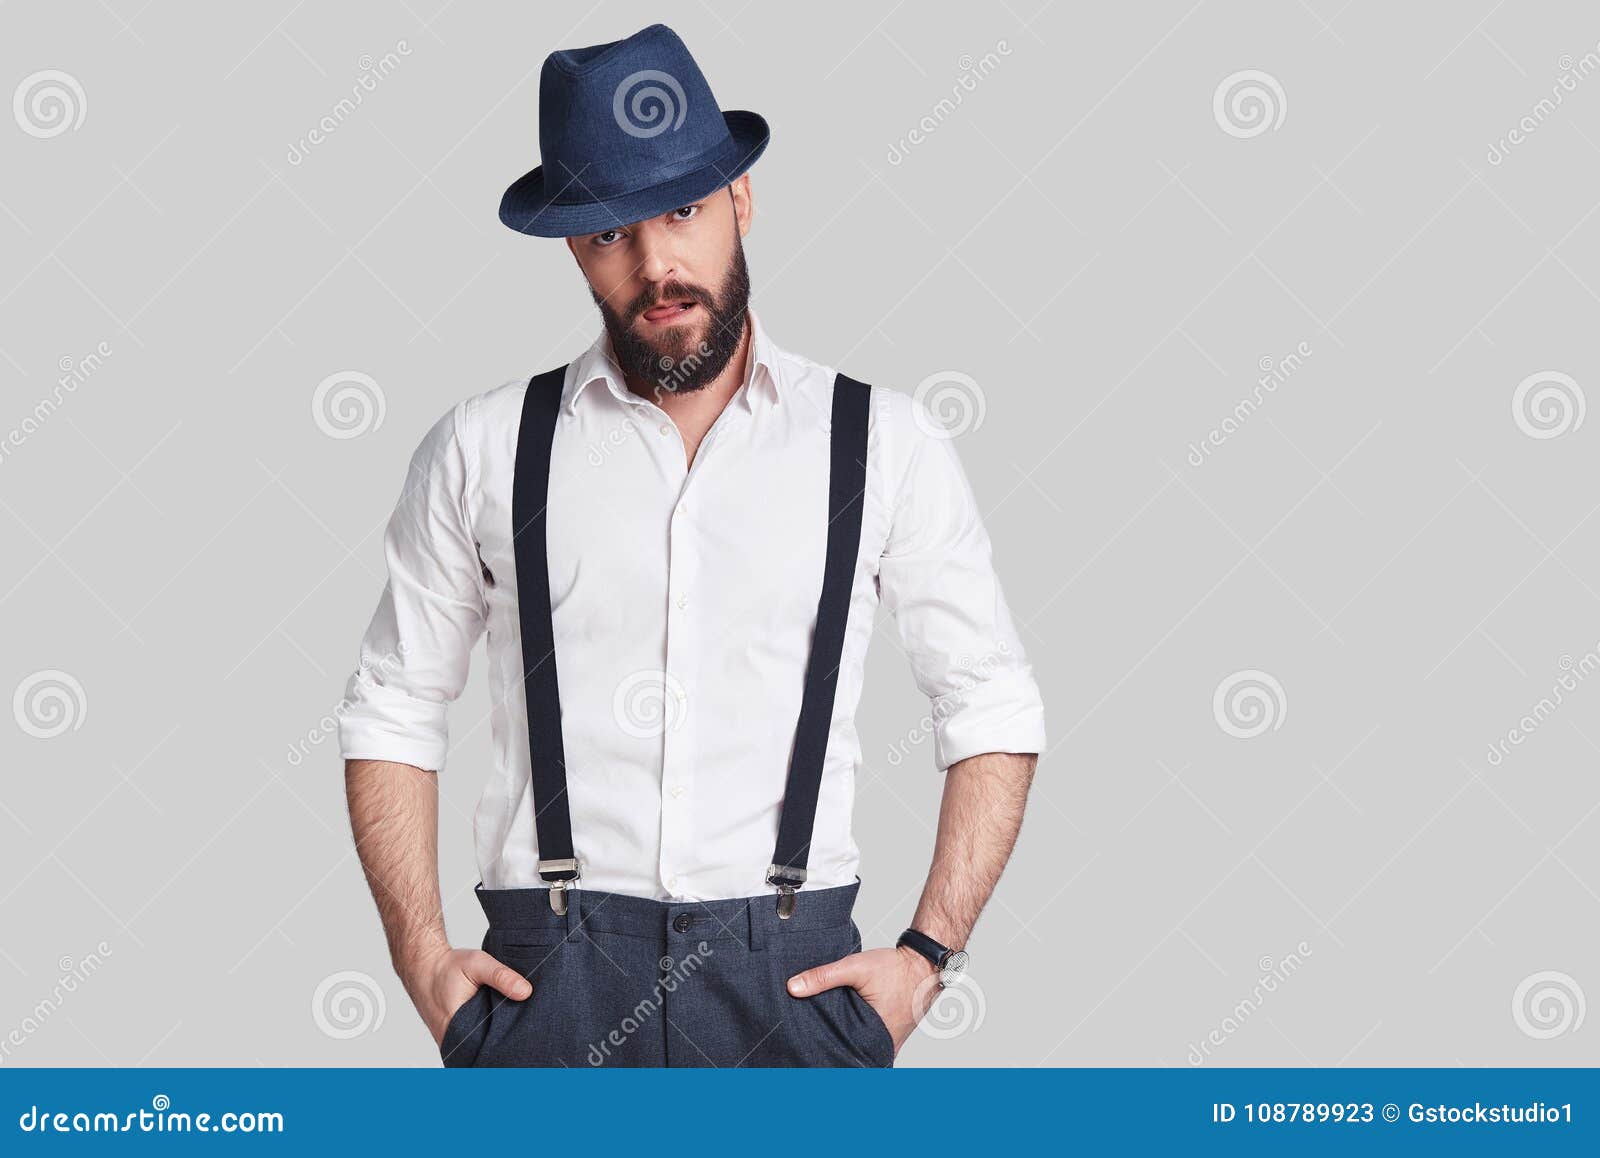 how to dress like a modern gangster